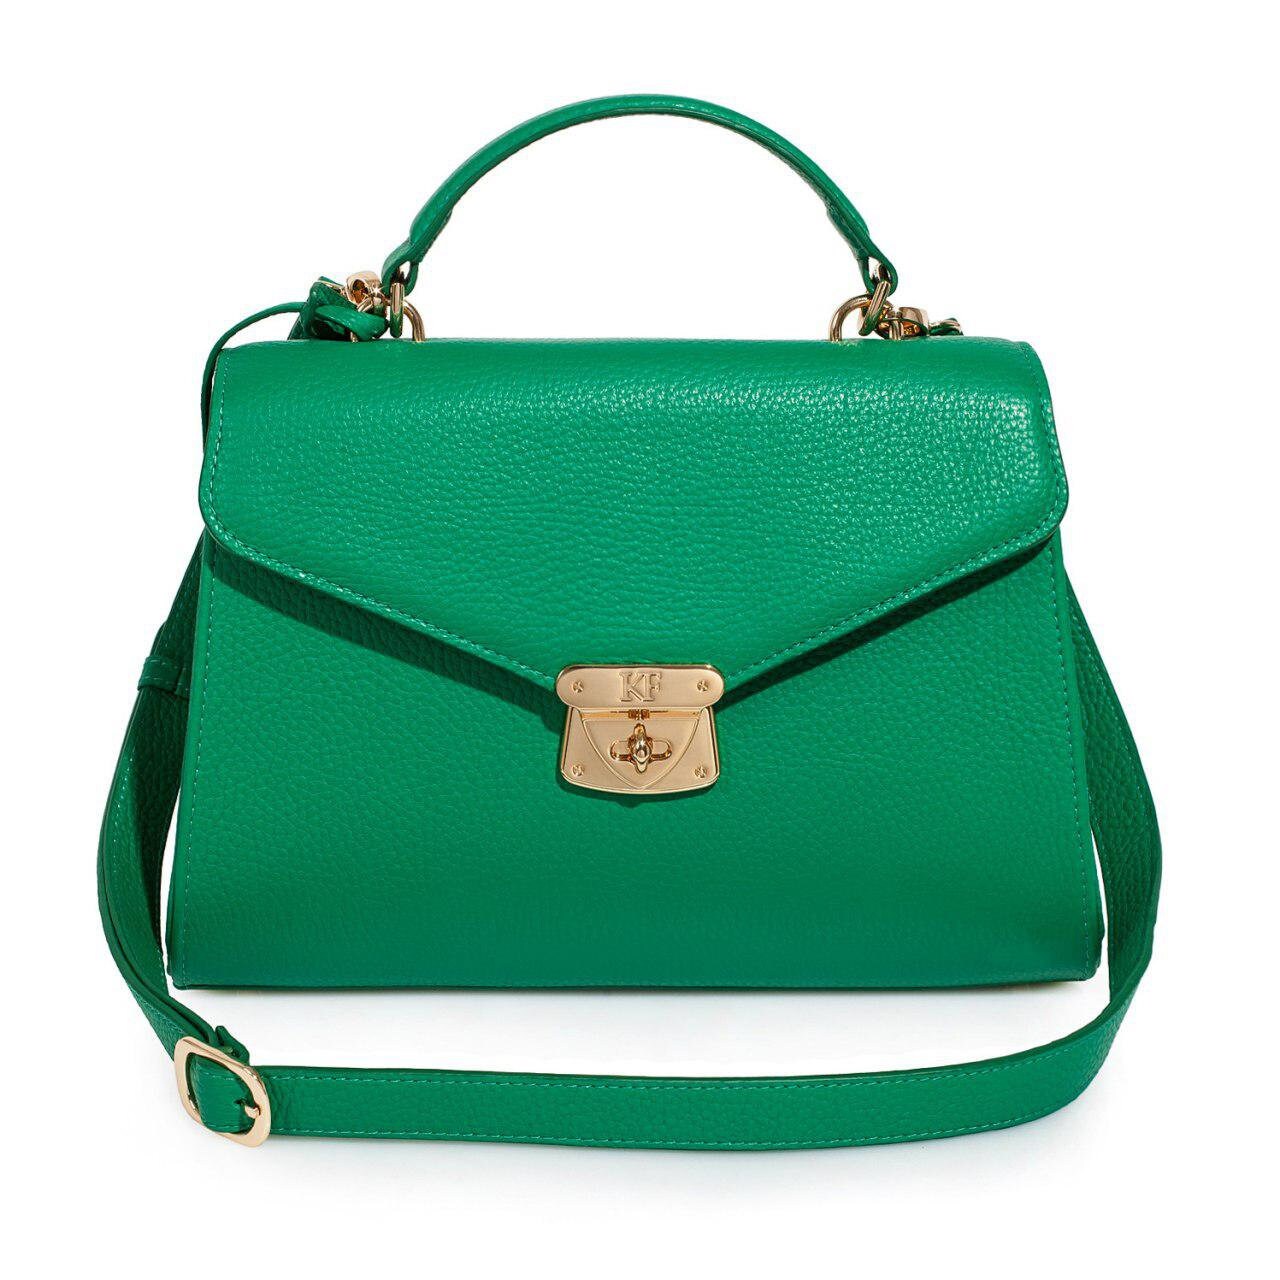 Leather Top Handle Bag Green Leather Handbag Top Handle | Etsy